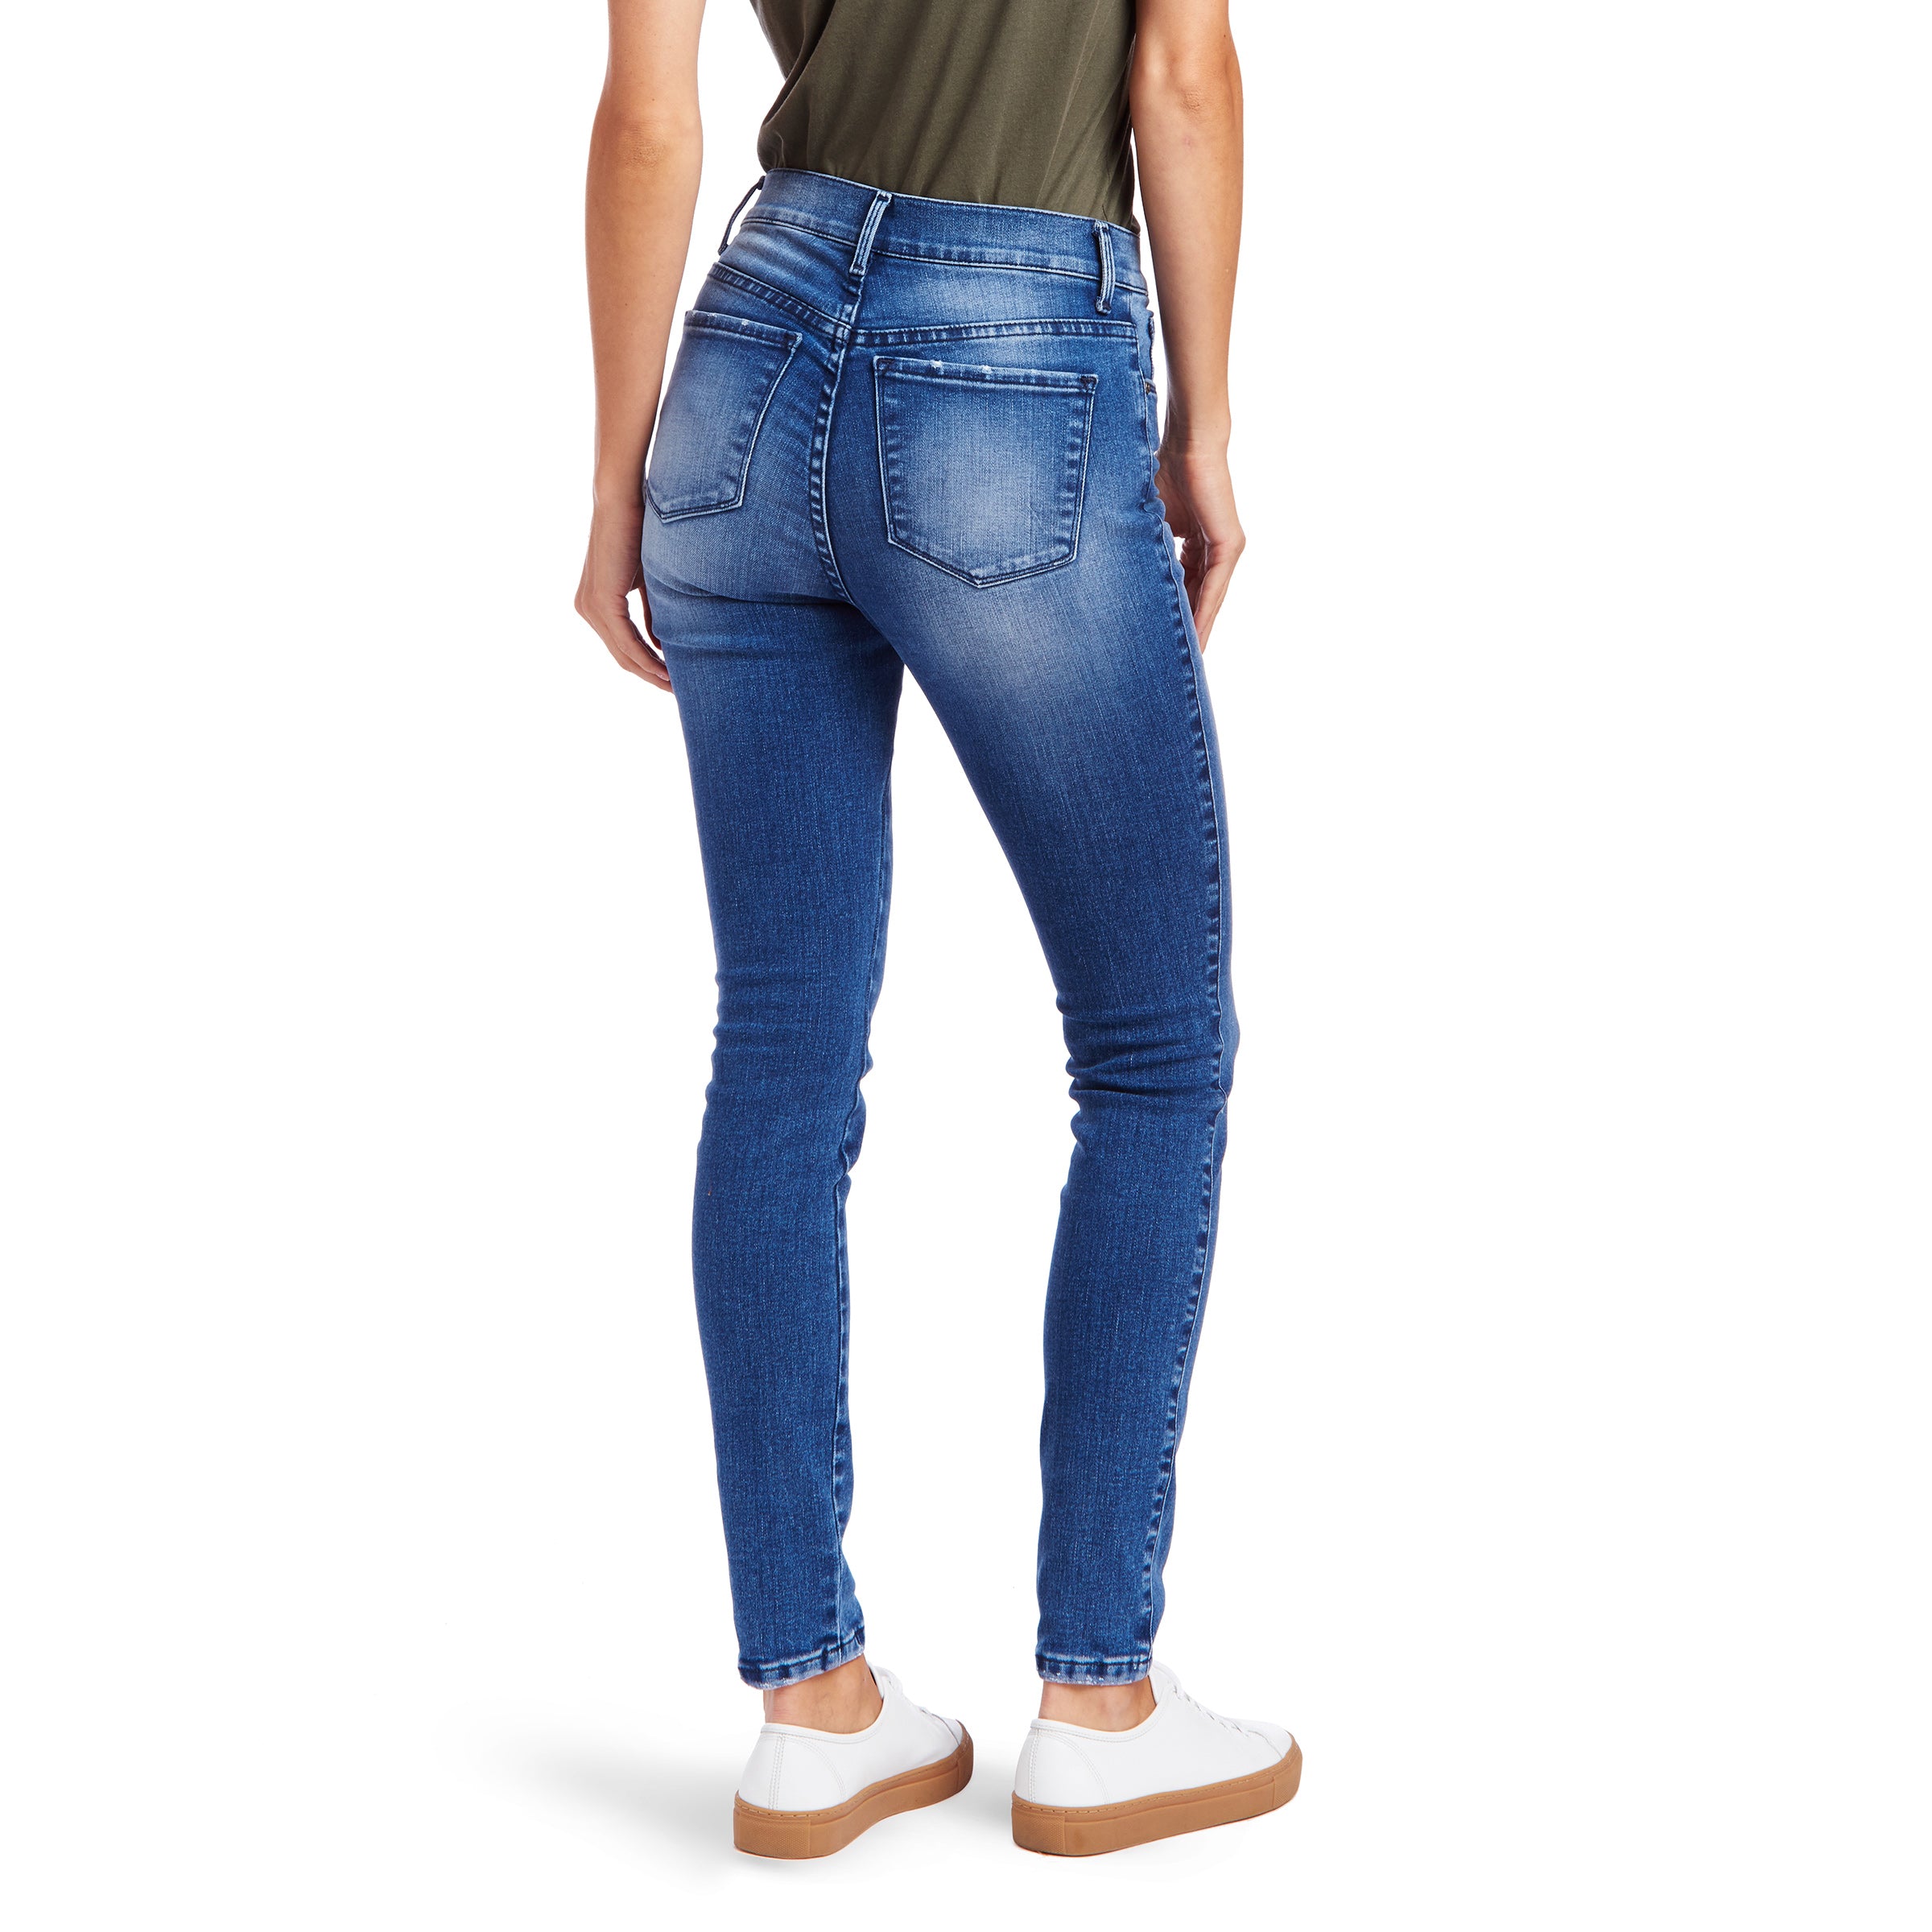 Women wearing Azul medio High Rise Skinny Moore Jeans